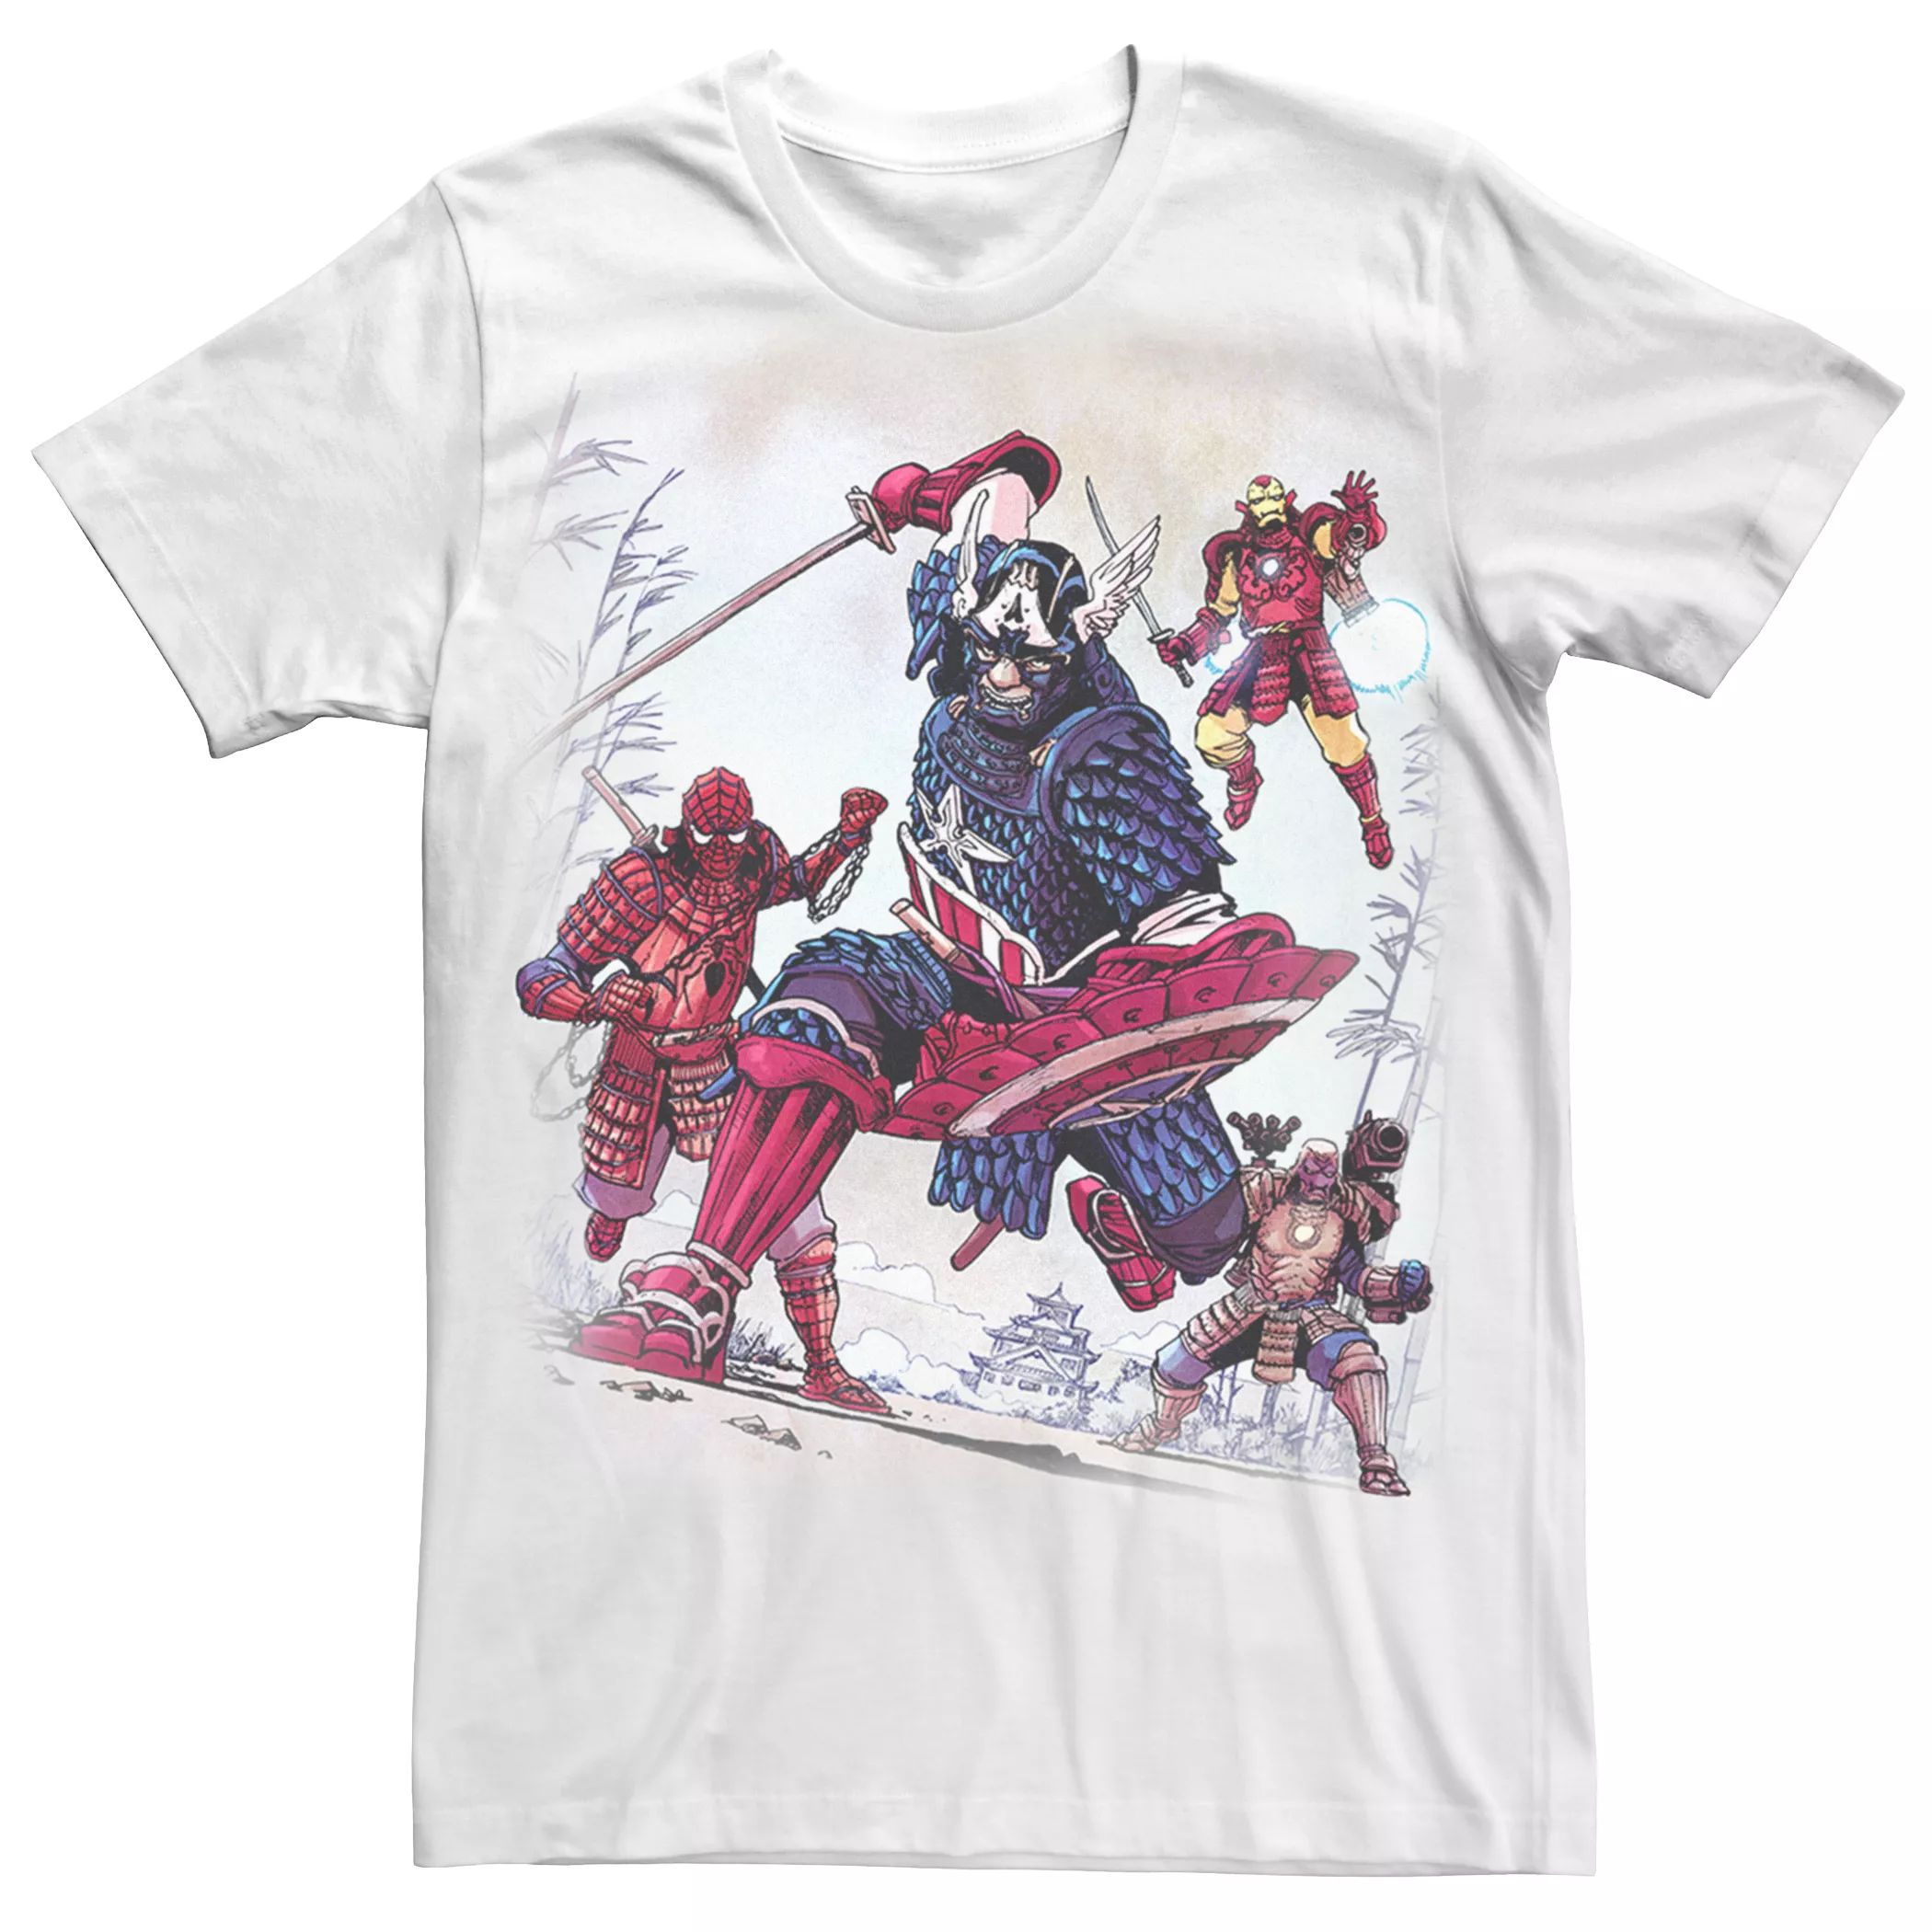 Мужская футболка Marvel Avengers Samurai Licensed Character мужская футболка samurai champloo mugen head licensed character